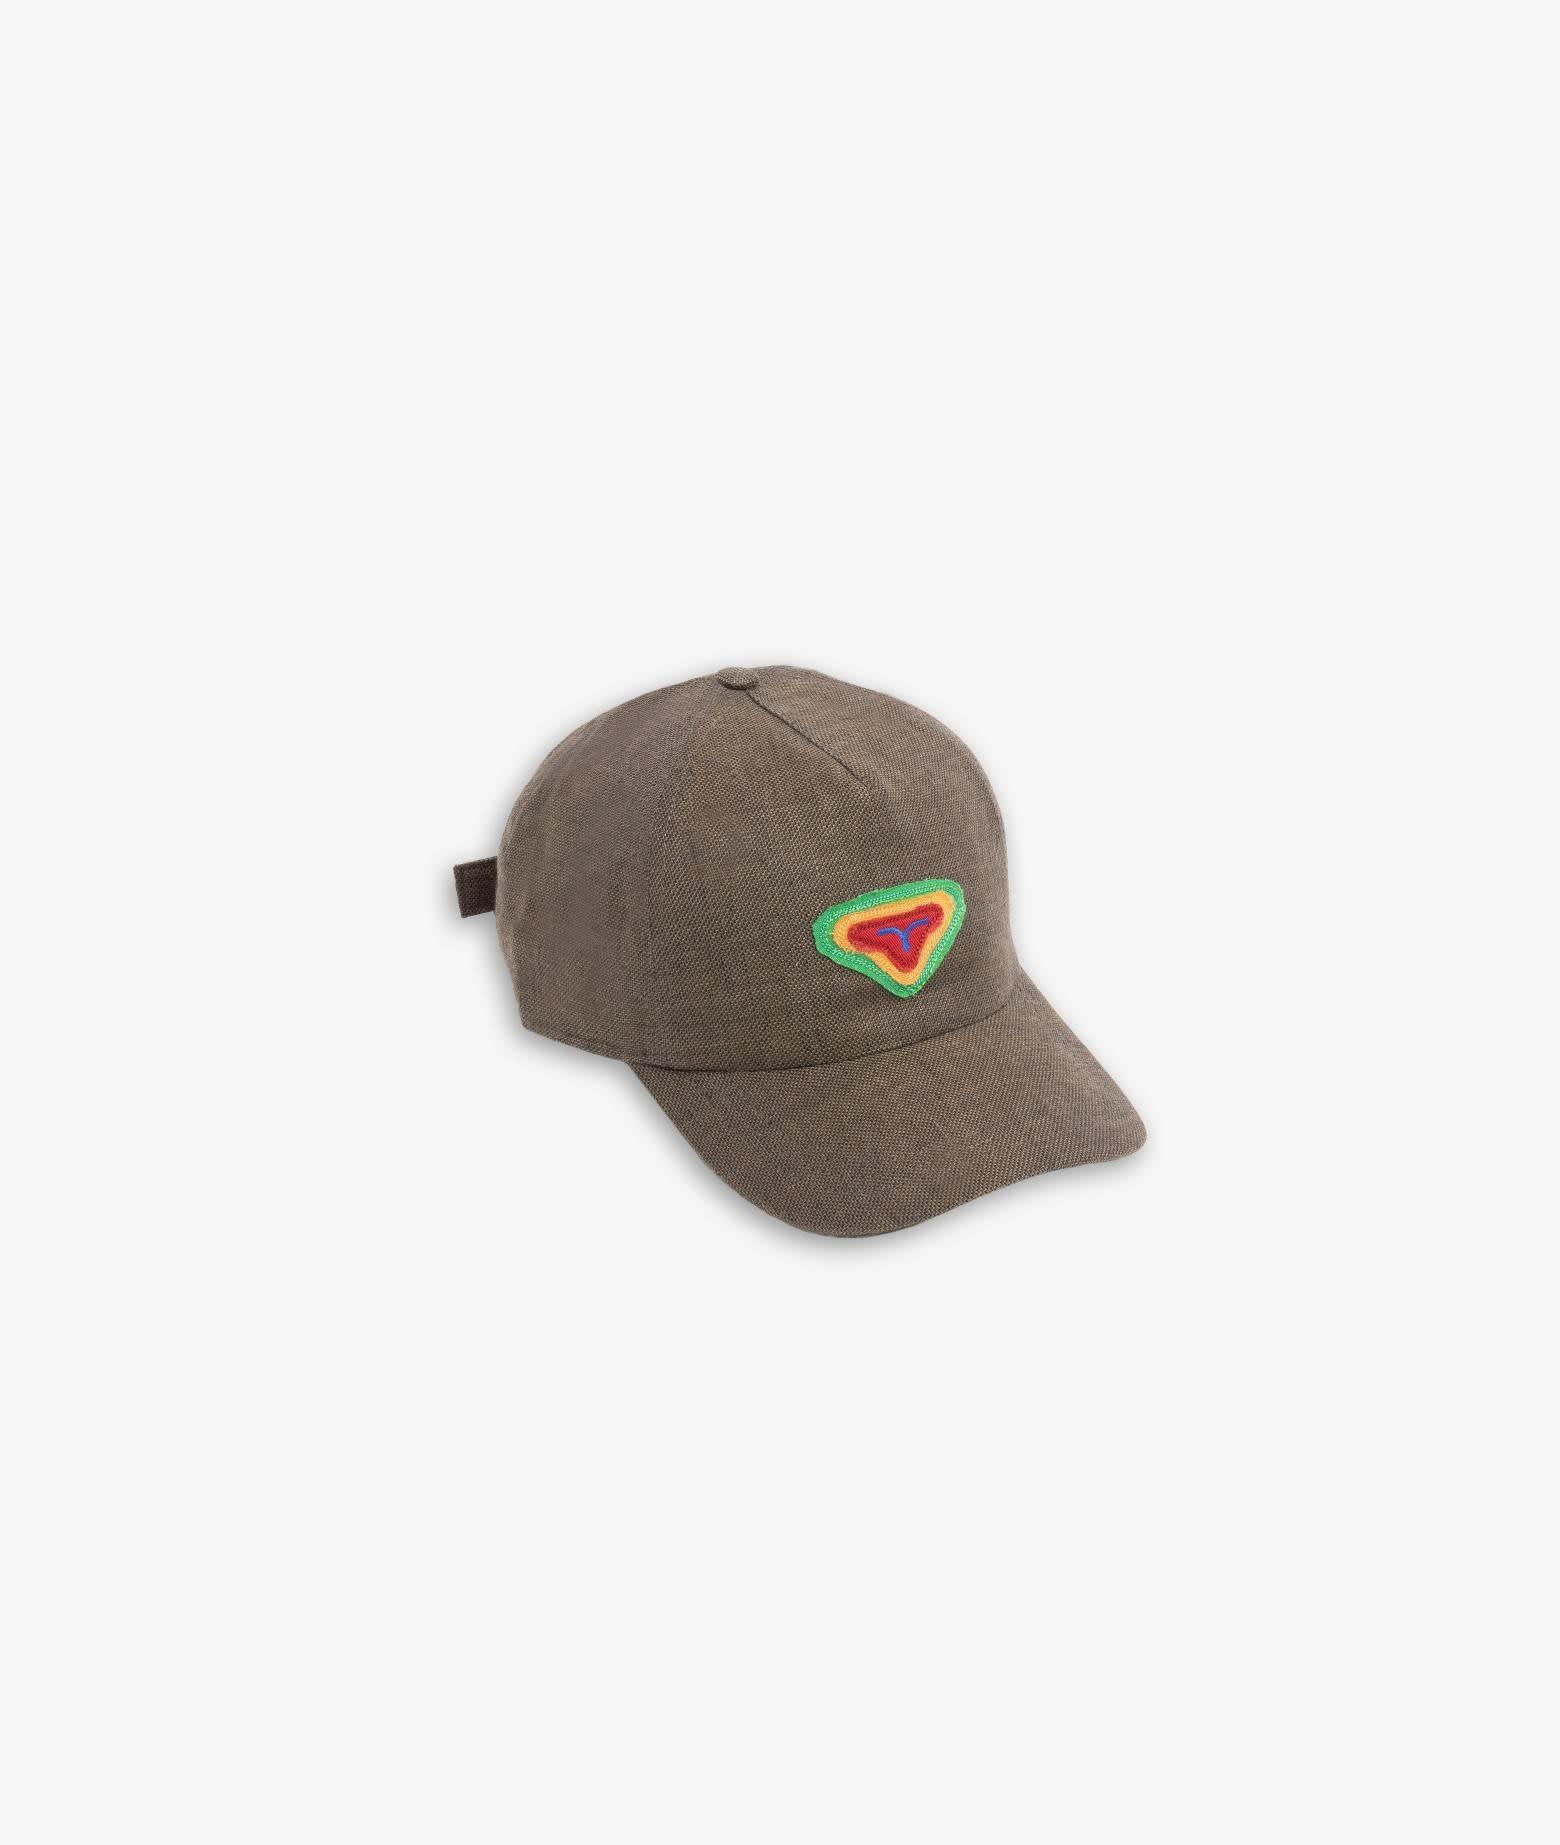 Larusmiani Baseball Cap Hat In Olive